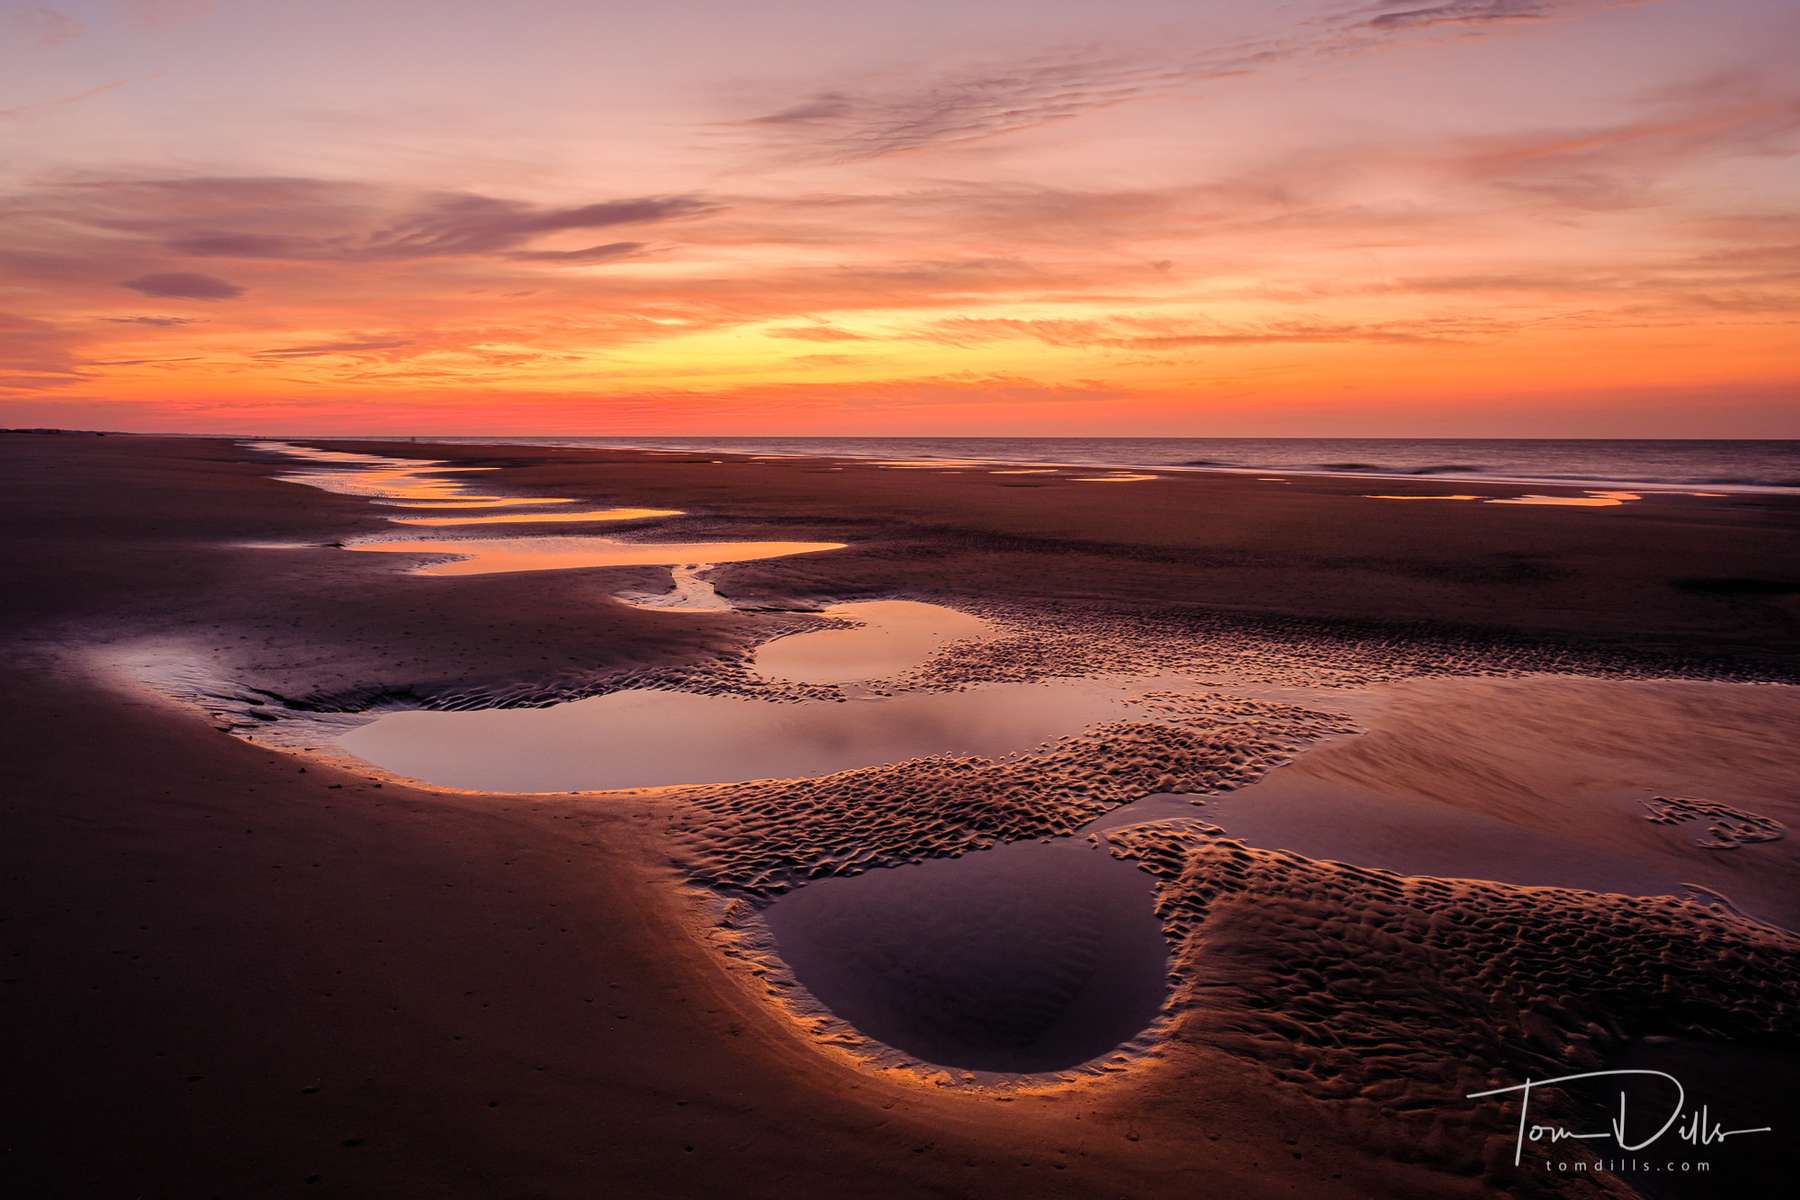 Sunrise on the beach on Hilton Head Island, South Carolina